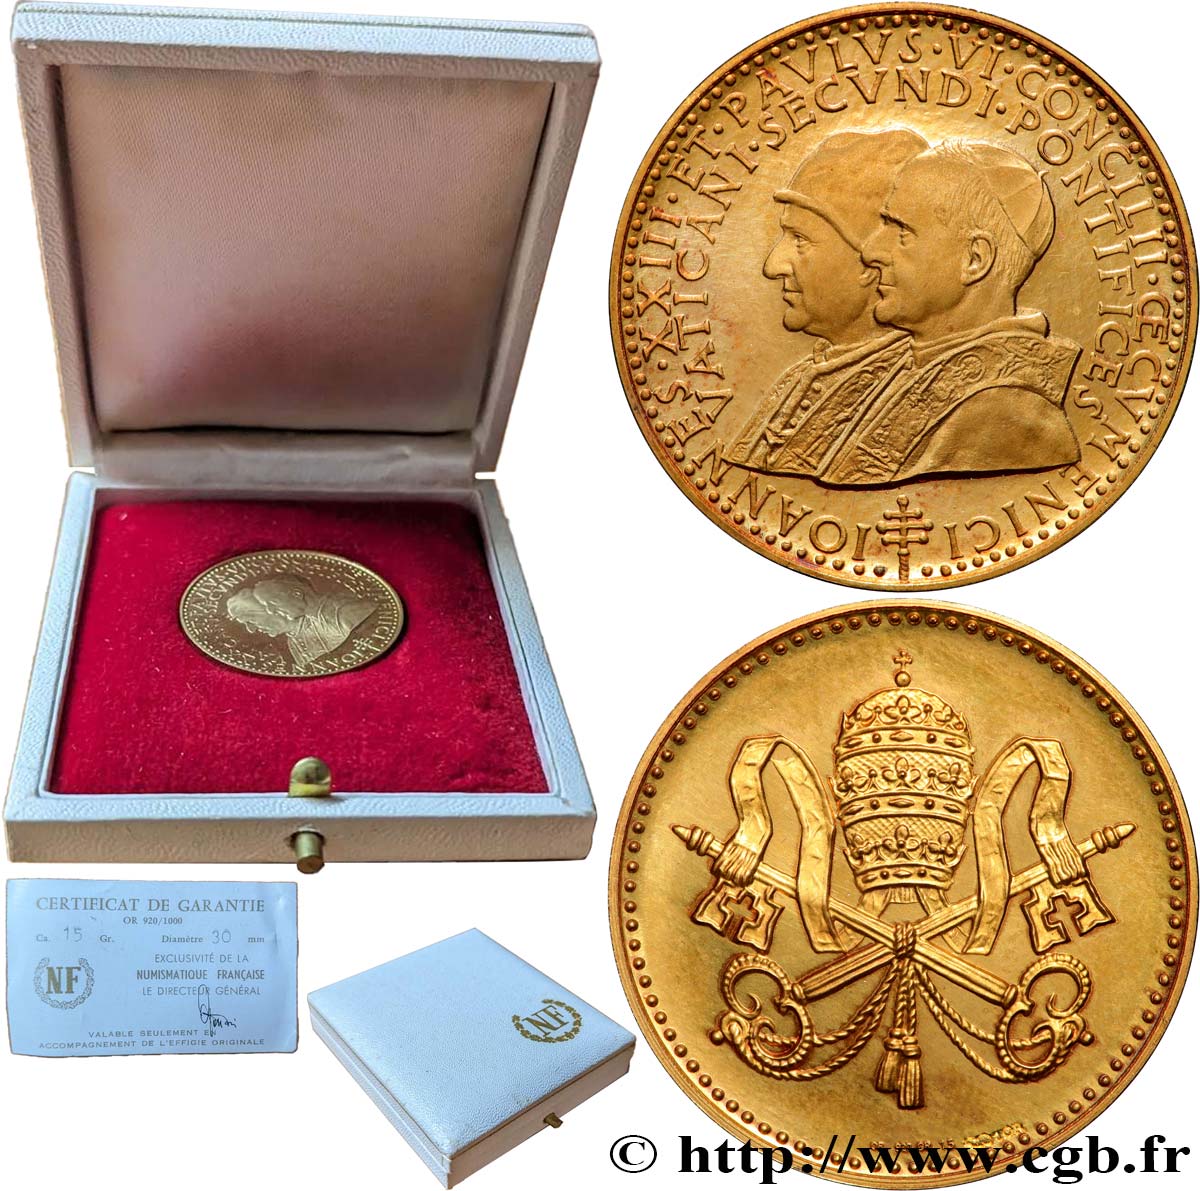 VATICANO E STATO PONTIFICIO Médaille, Jean XXIII et Paul VI, Concile SPL